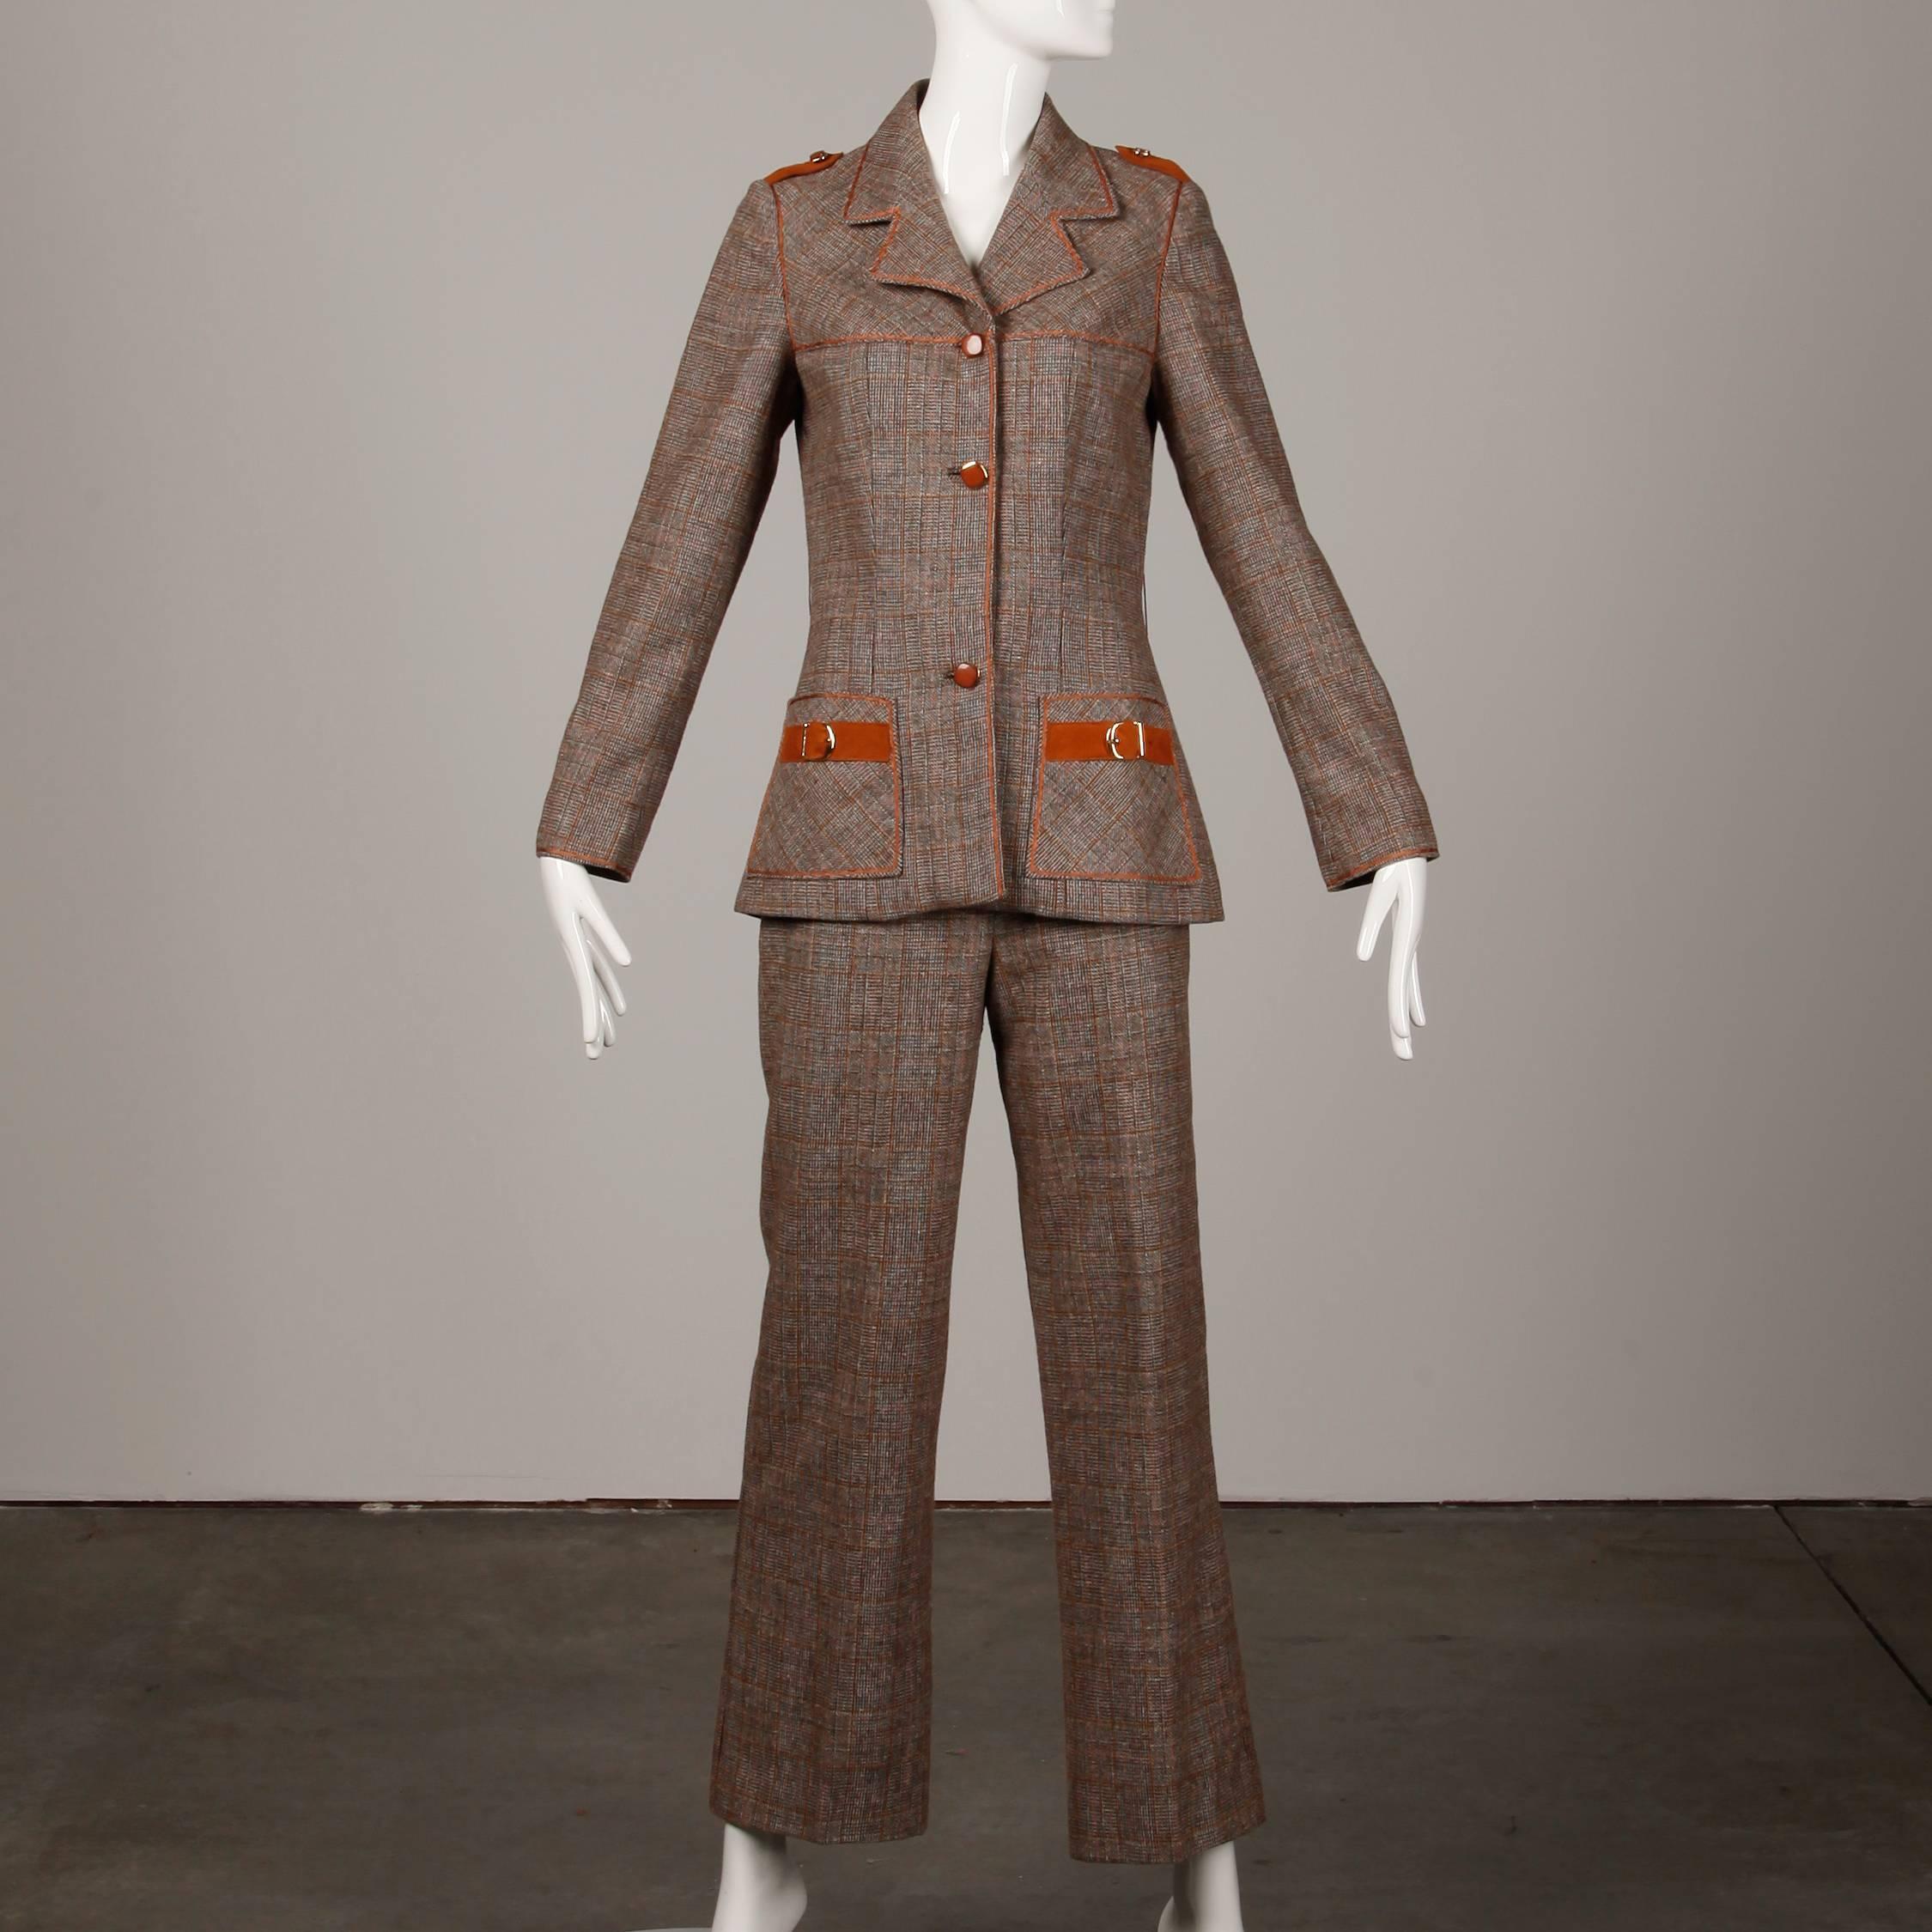 Black 1970s Lilli Ann Vintage Wool Tweed + Suede Leather Pants + Jacket Suit Ensemble